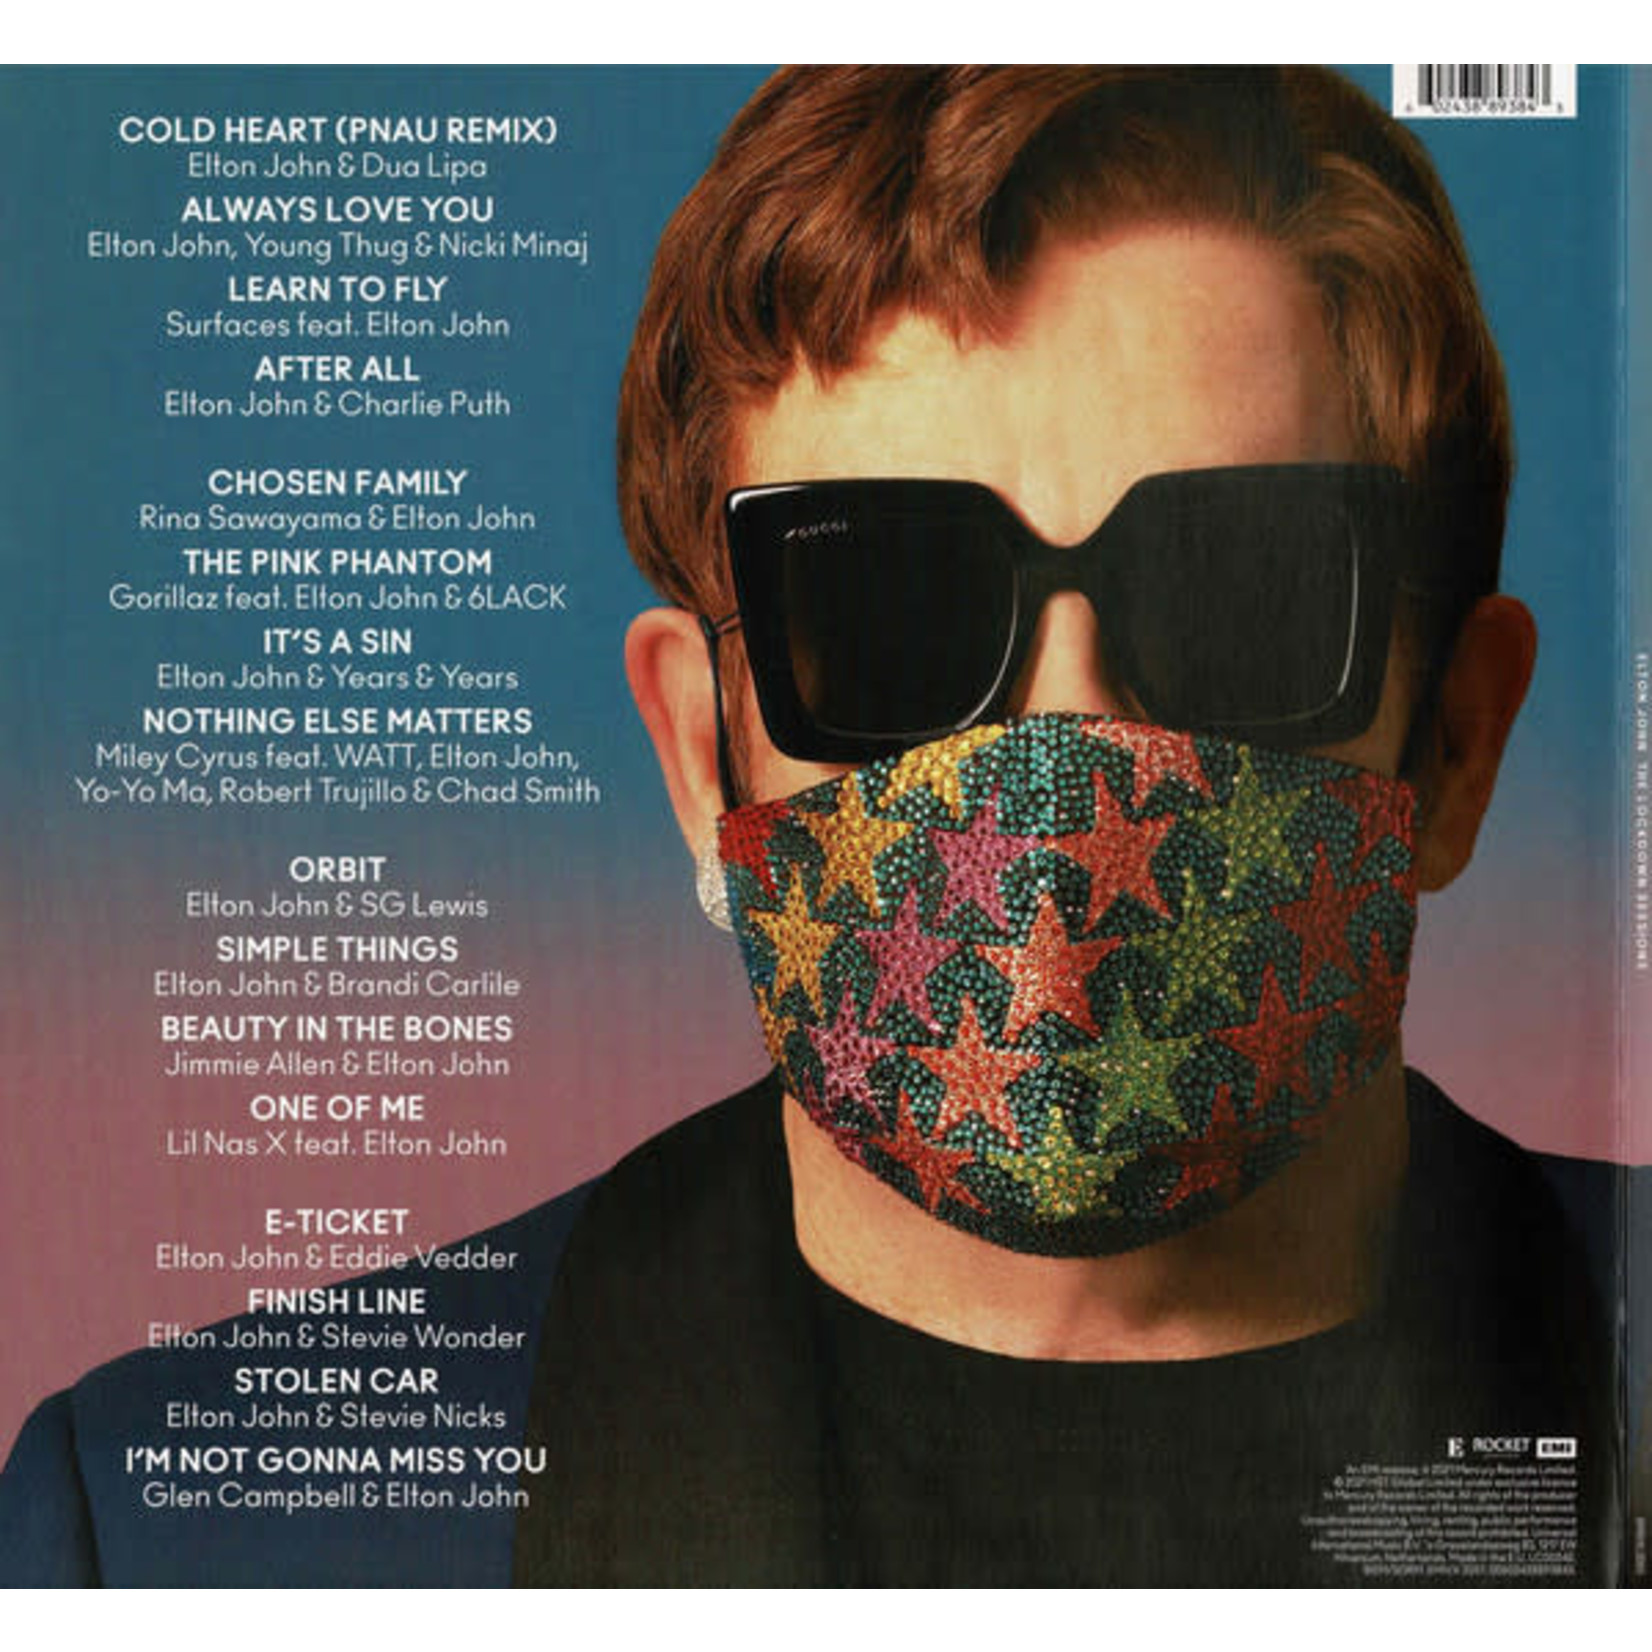 Interscope Elton John - The Lockdown Sessions (2LP) [Blue]